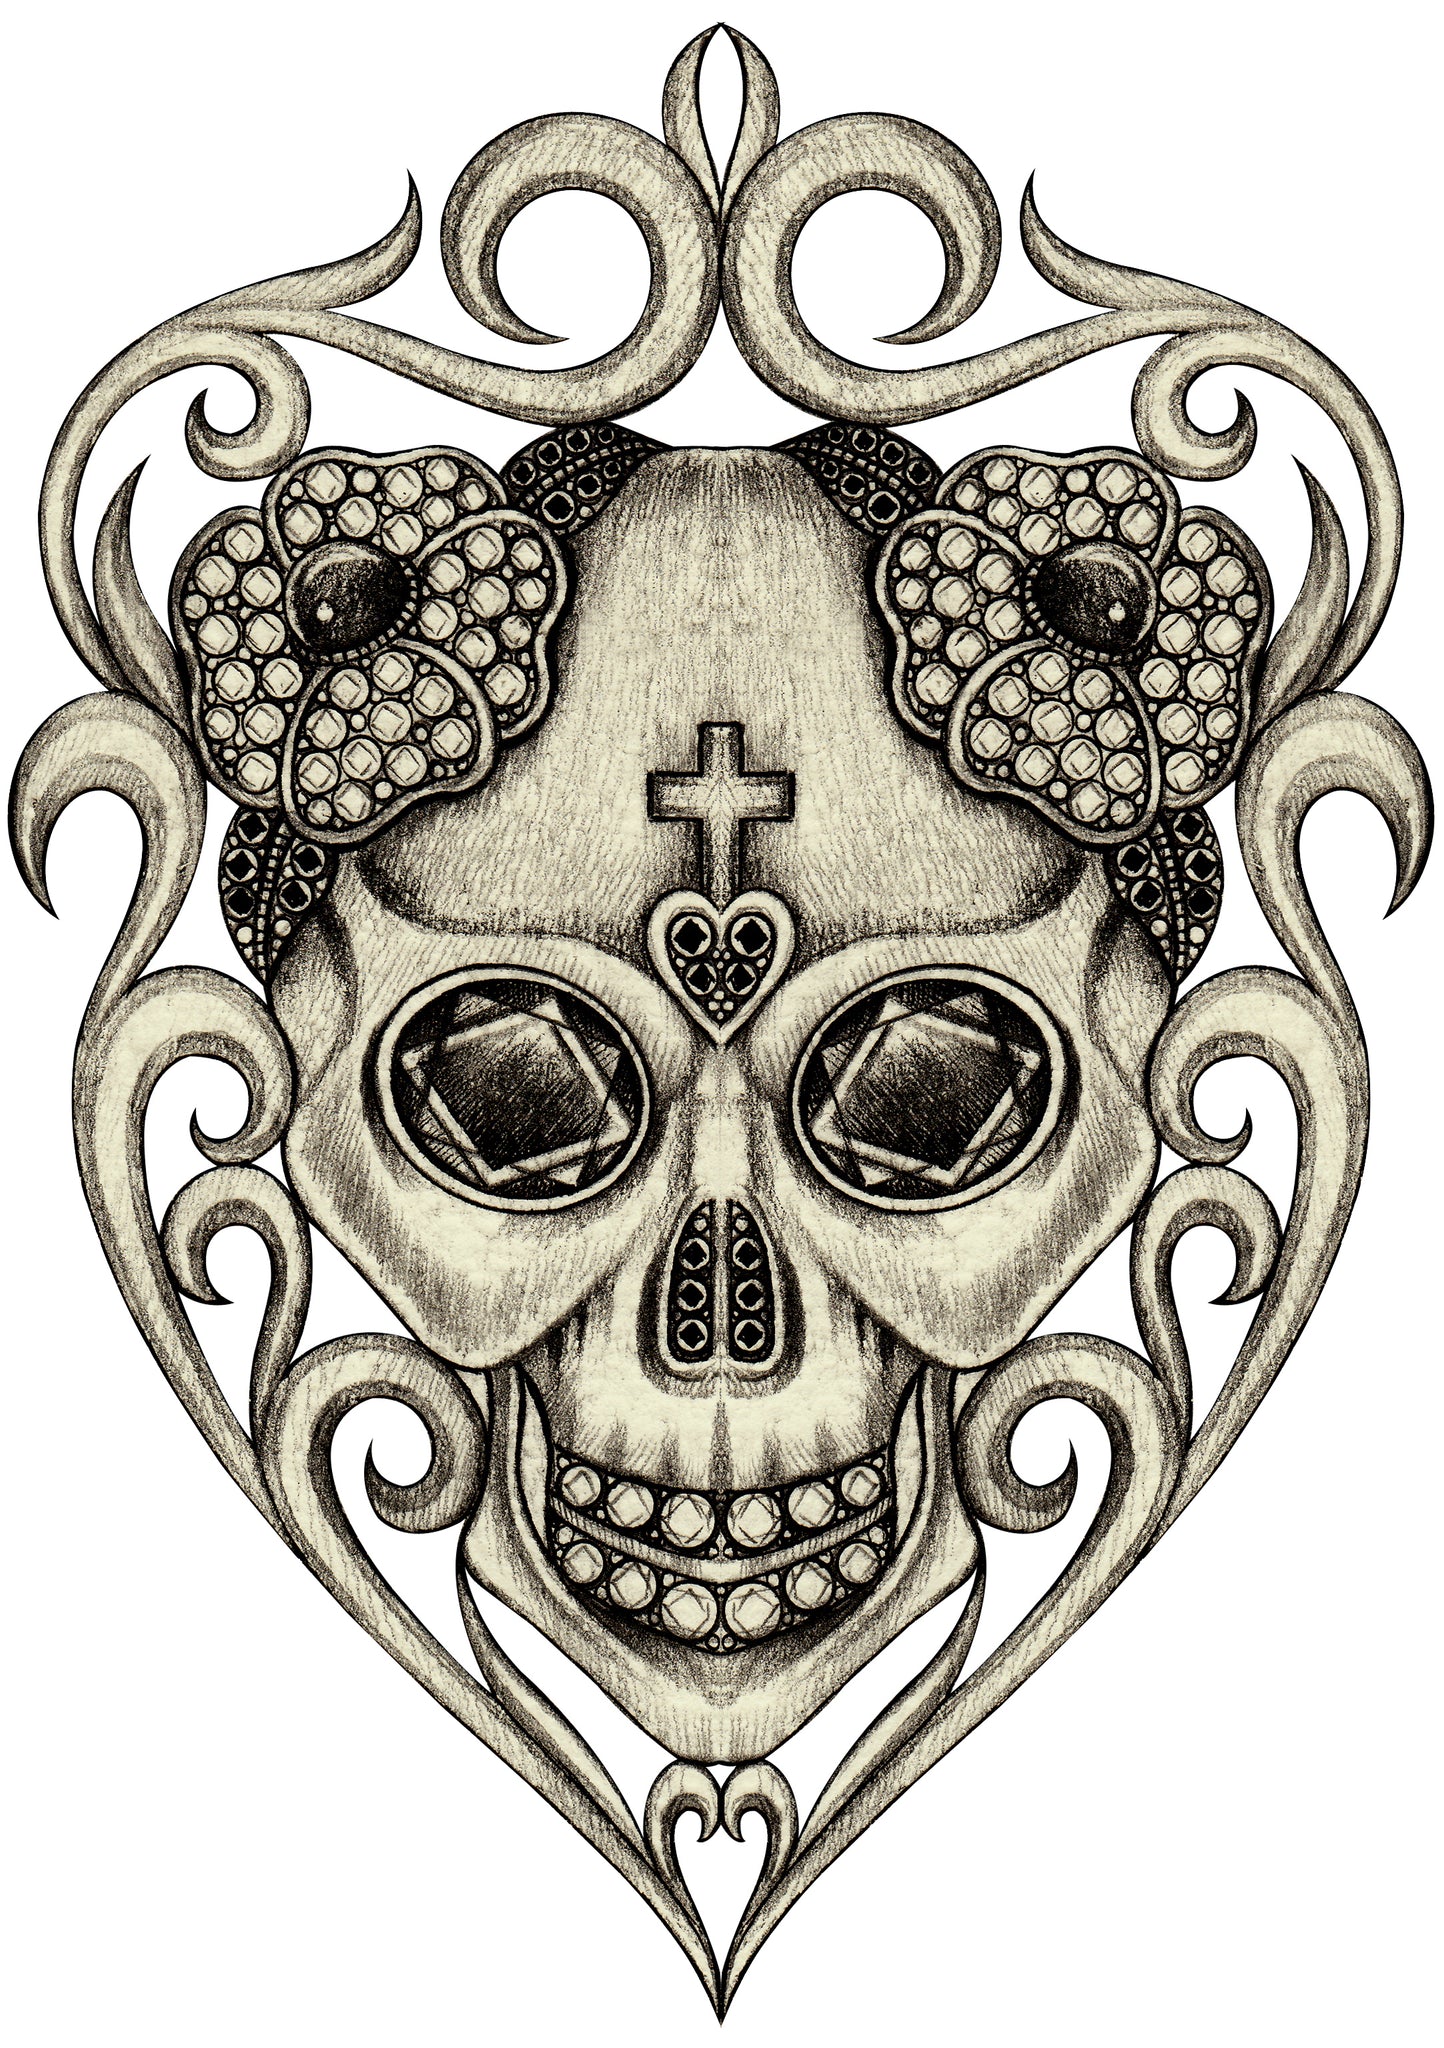 Pencil Sketch Dia de los Muertos Jeweled Flower Skull #1 Vinyl Decal Sticker